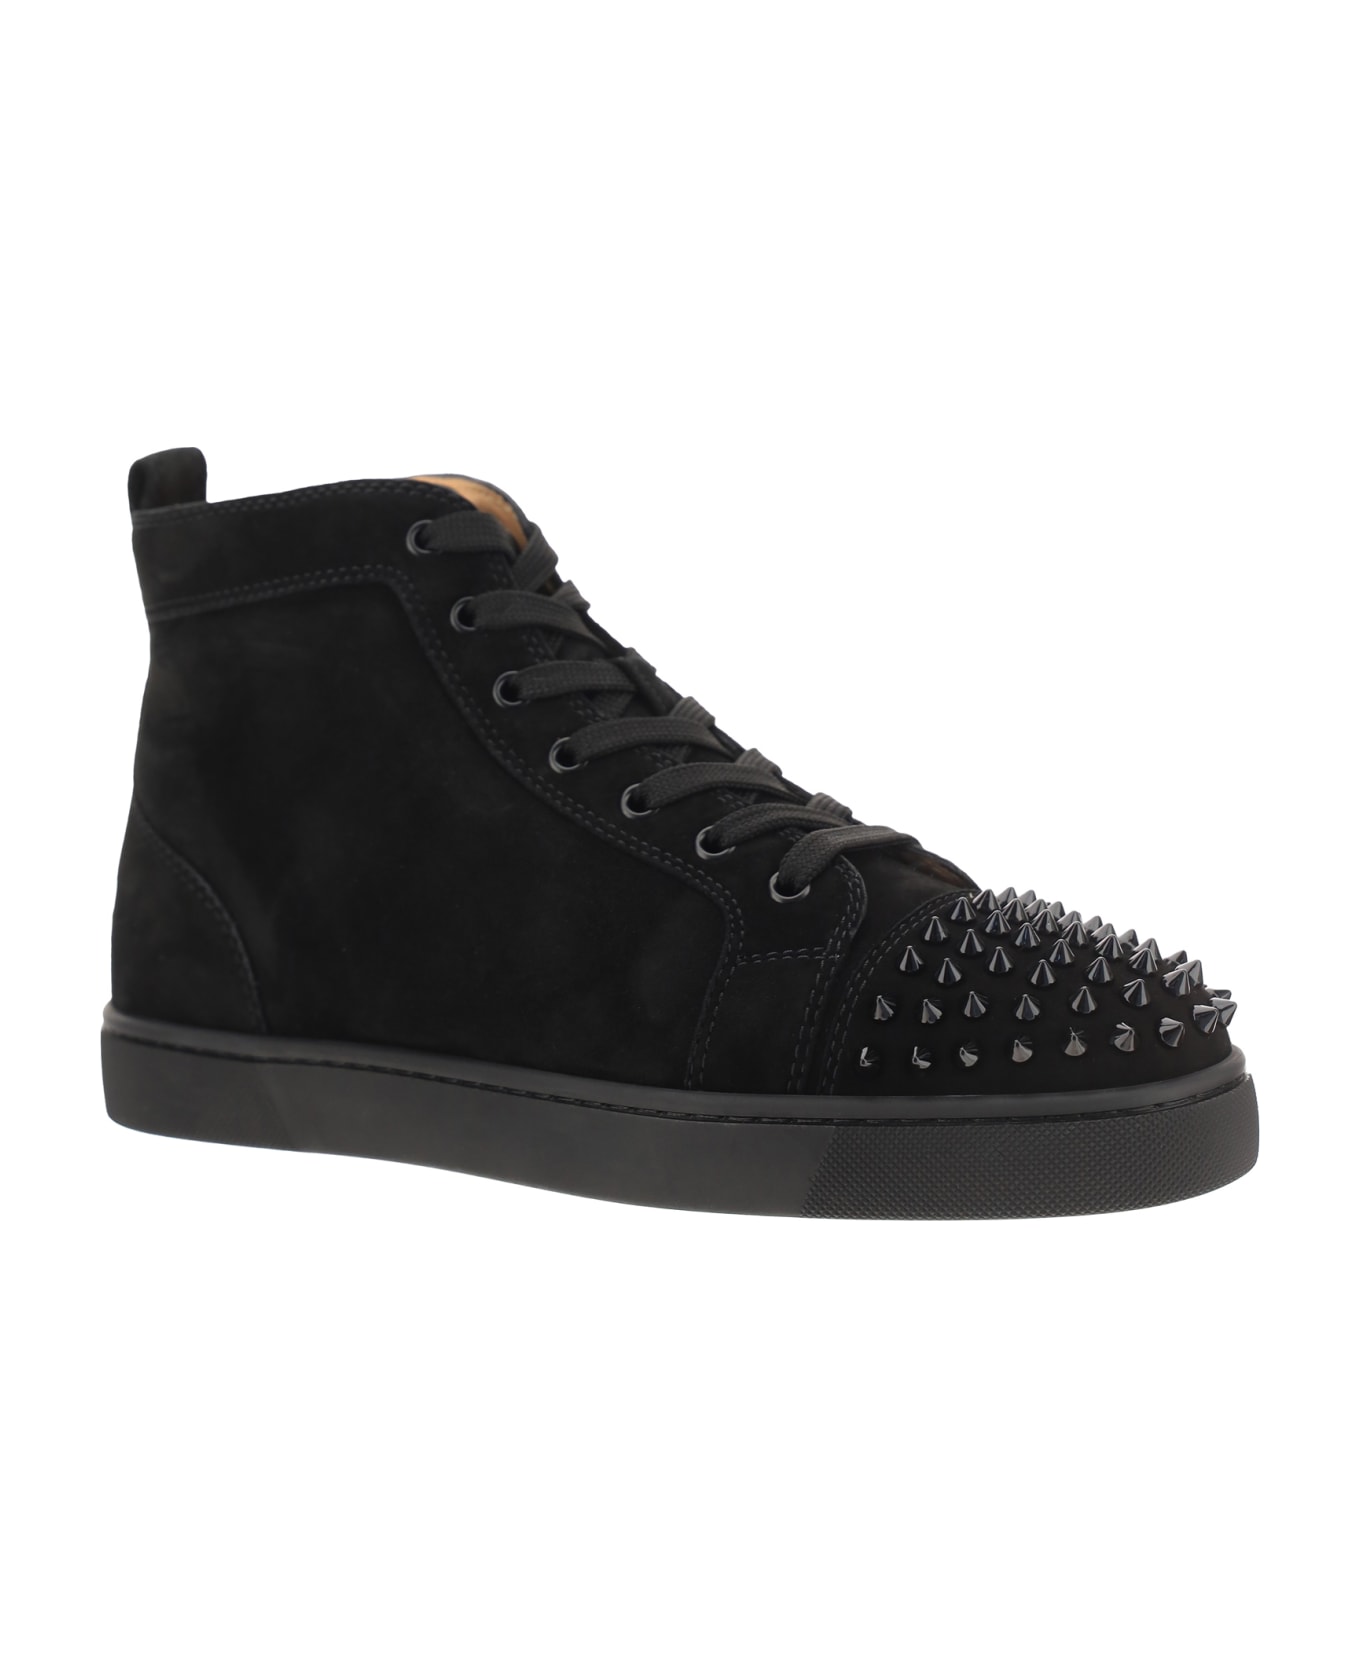 Christian Louboutin Lou Spikes Sneakers - Black/black/bk スニーカー